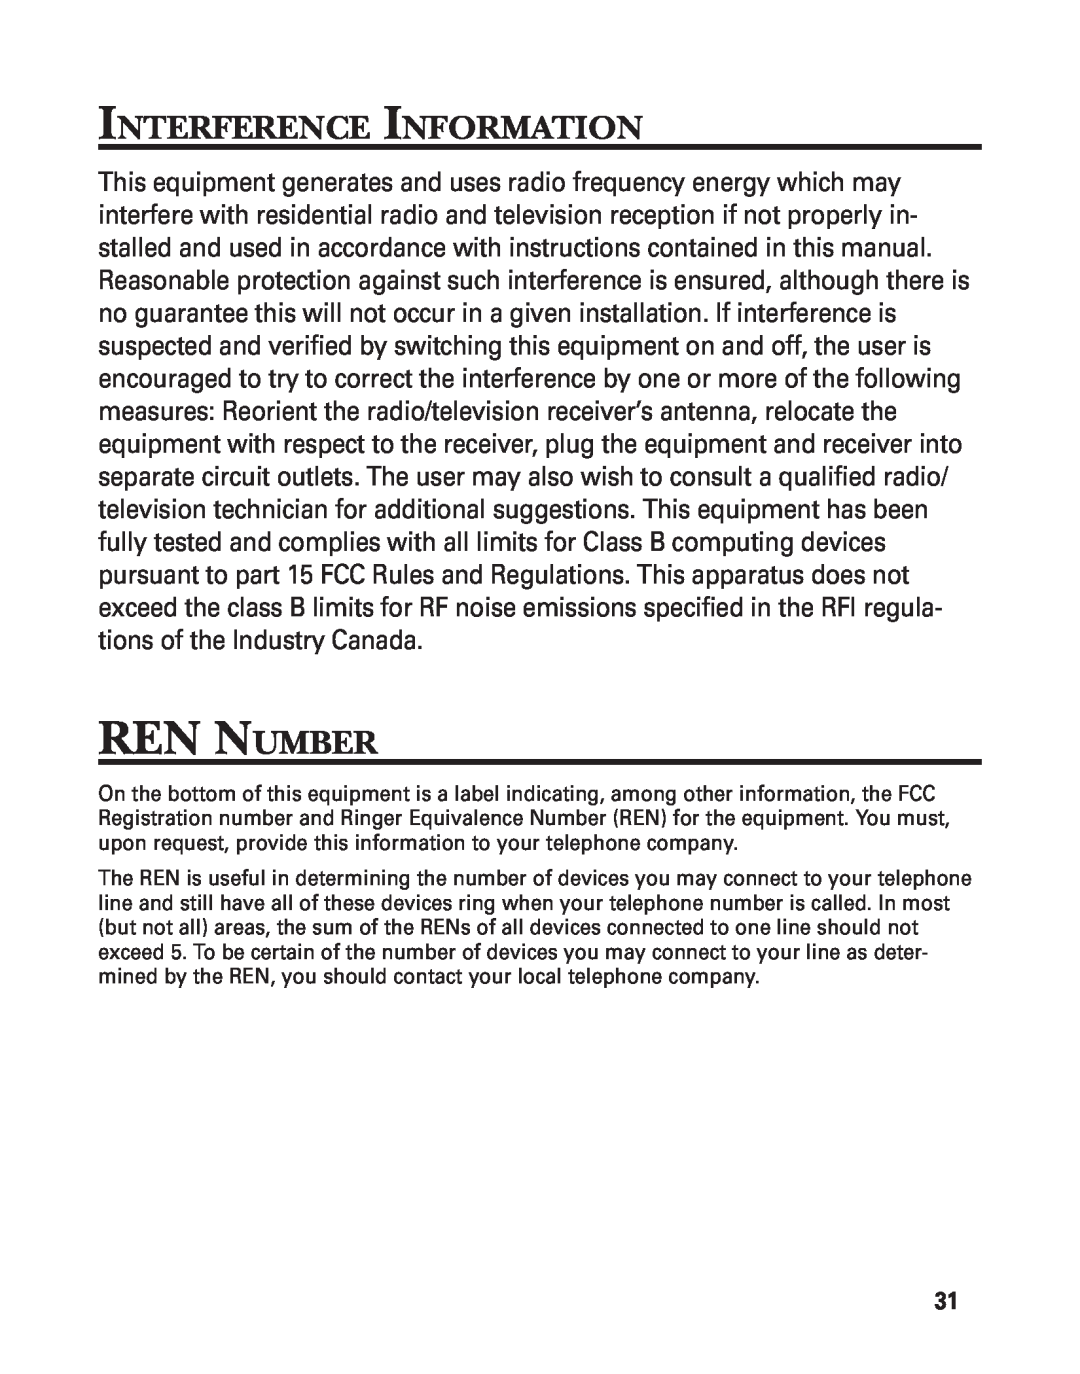 GE 2-9772 manual Interference Information, Ren Number 